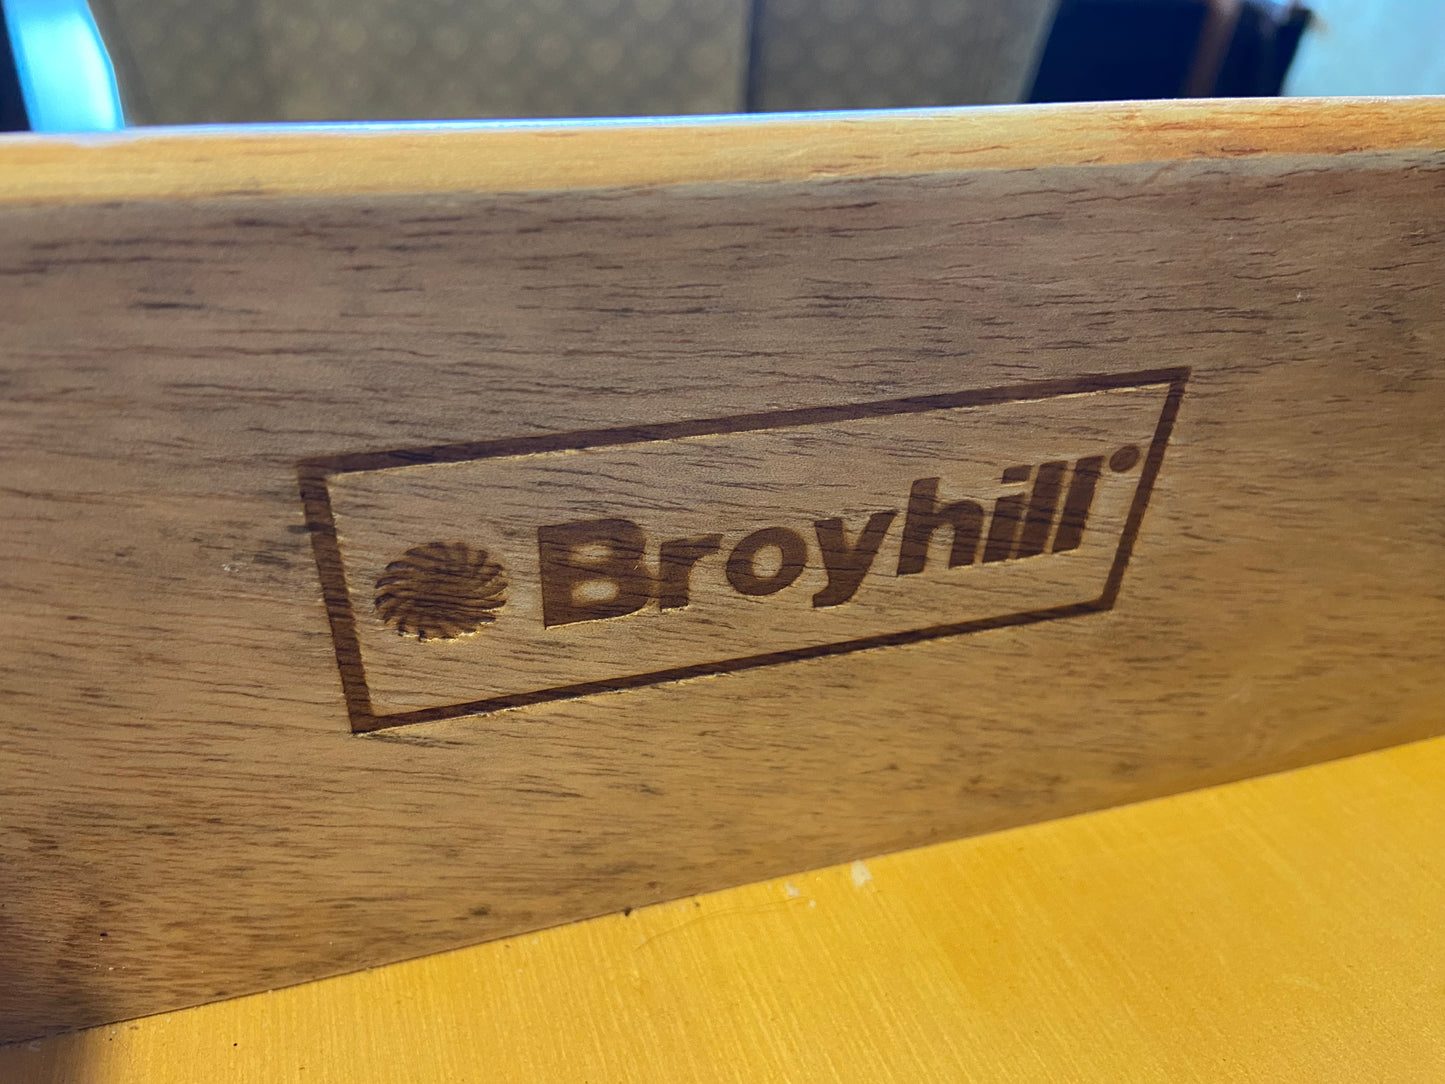 Broyhill Buffet (27445)